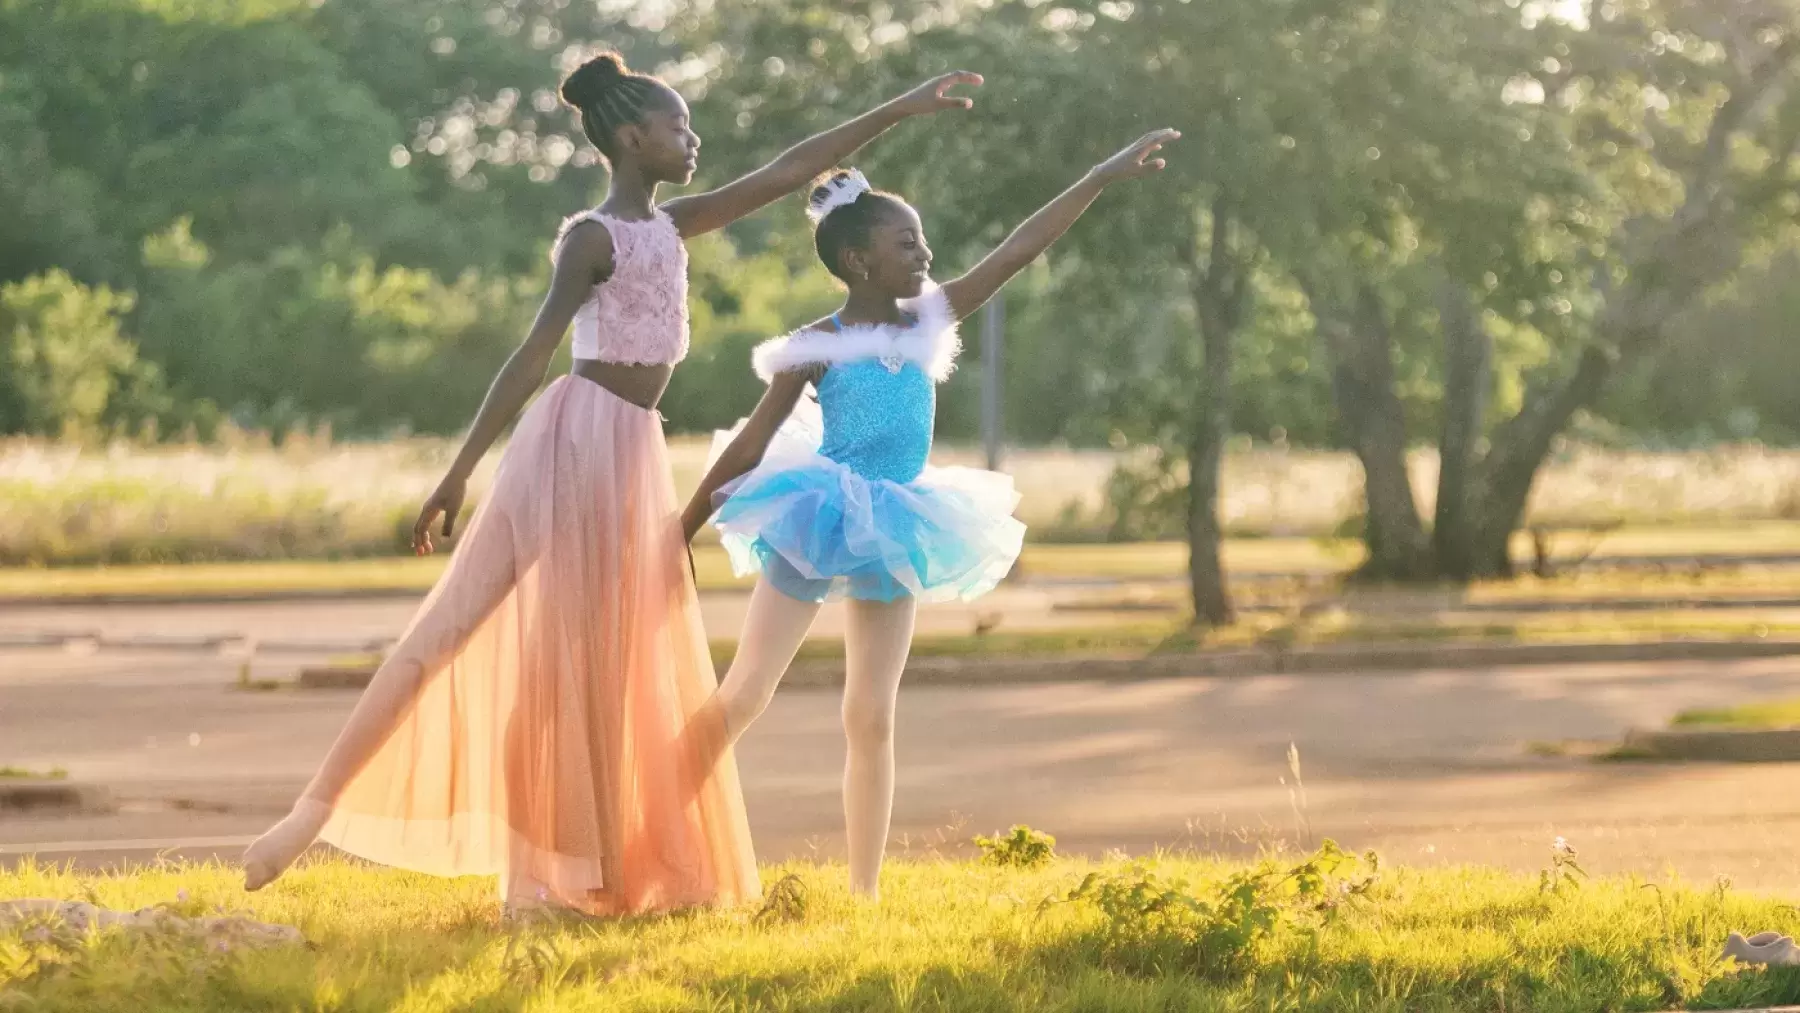 Two girls practicing ballet